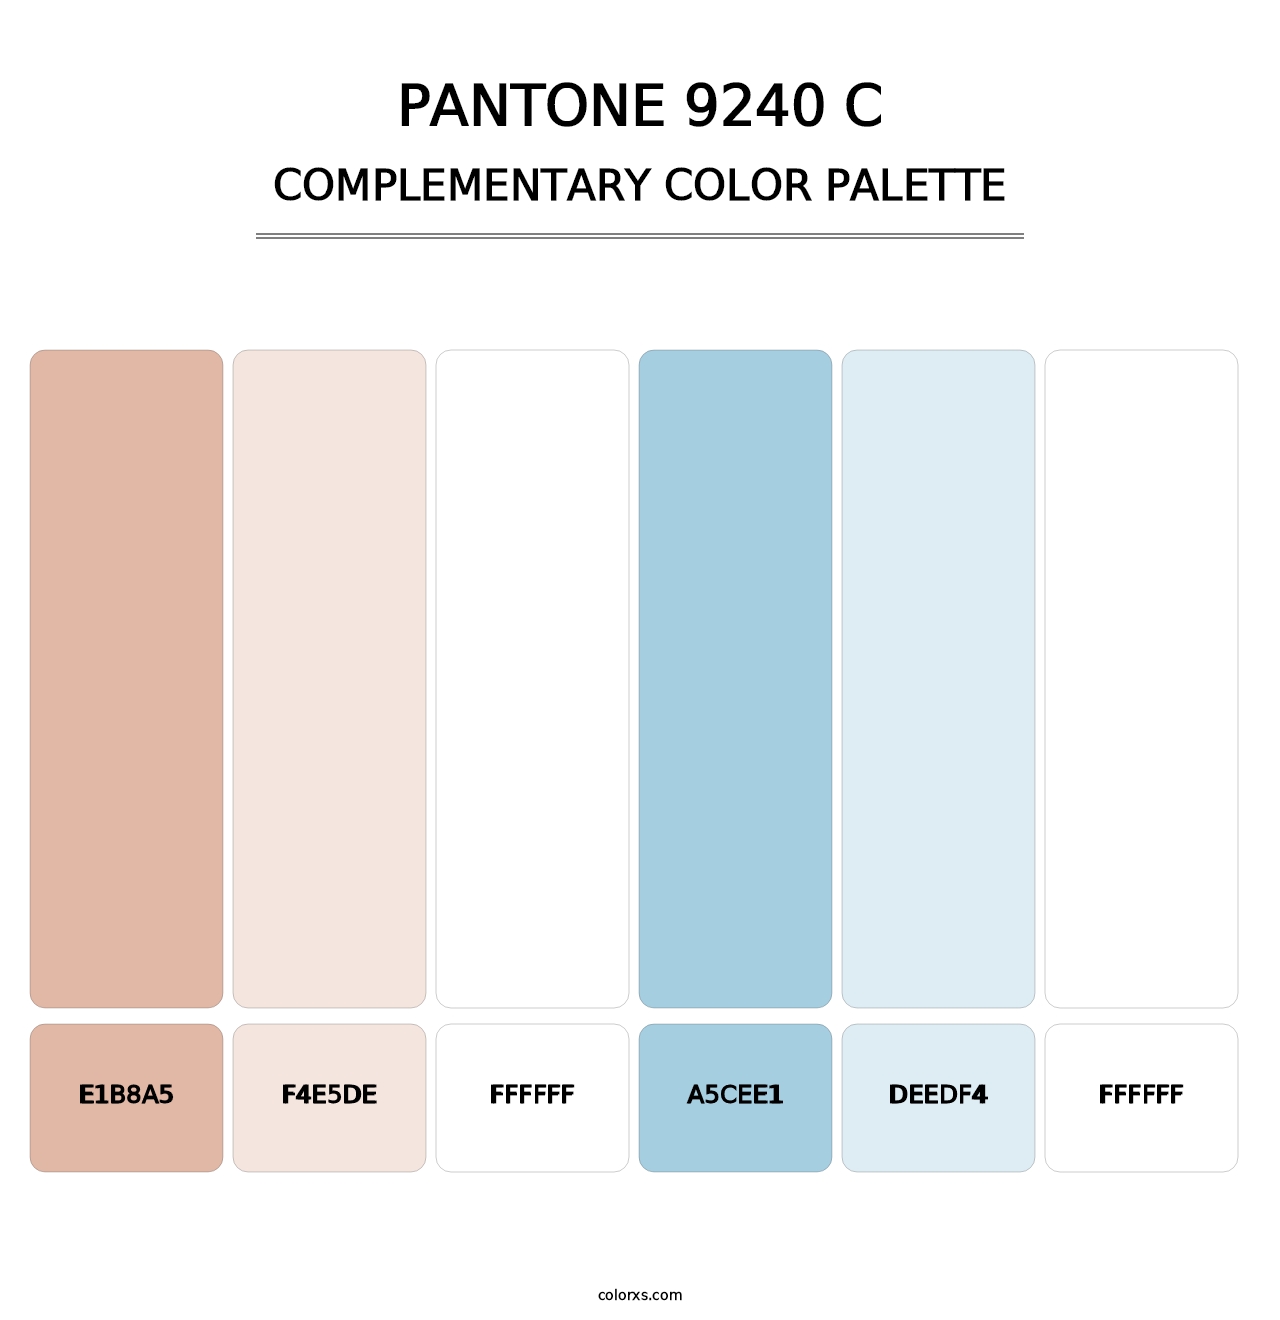 PANTONE 9240 C - Complementary Color Palette